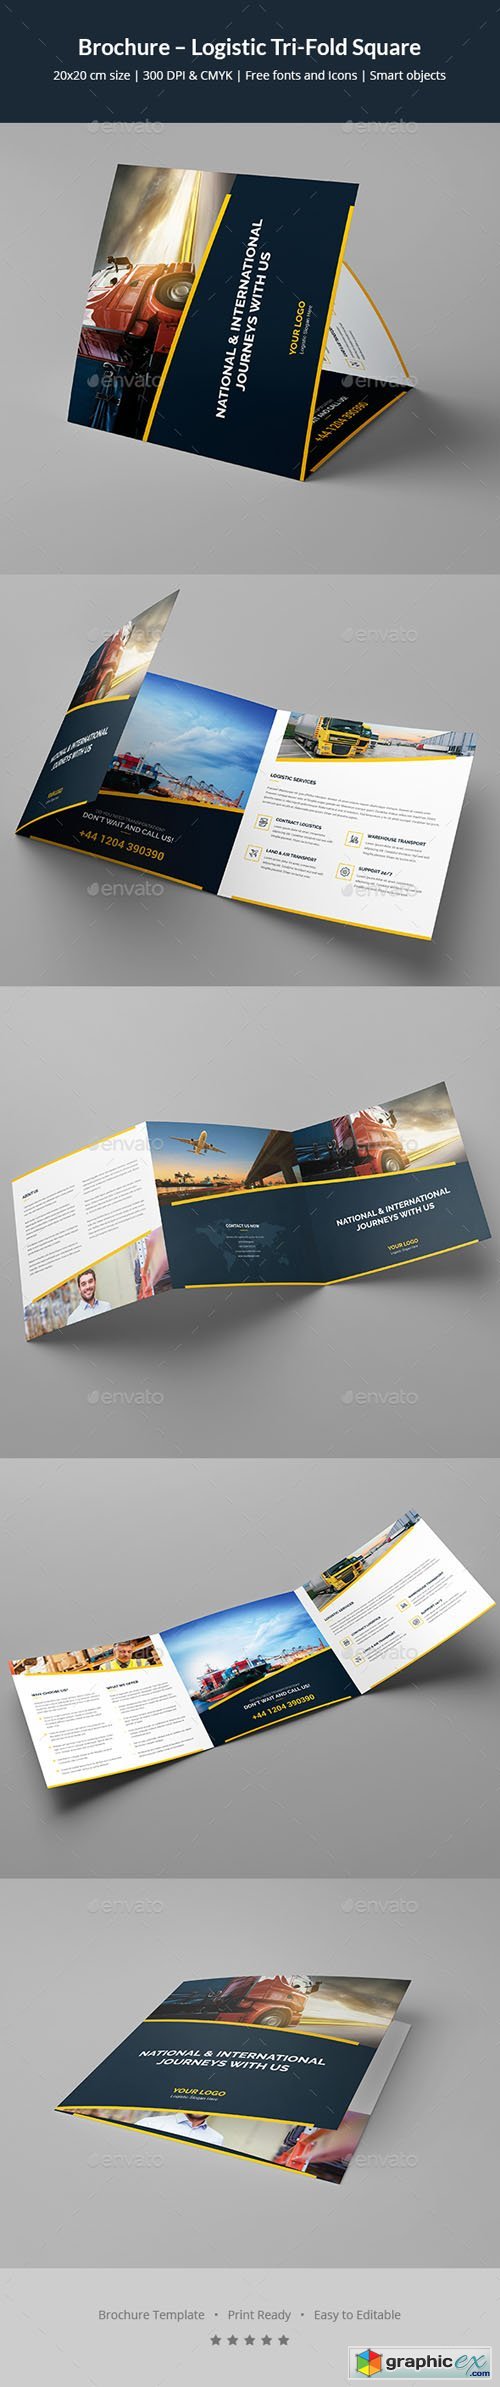 Brochure - Logistic Tri-Fold Square